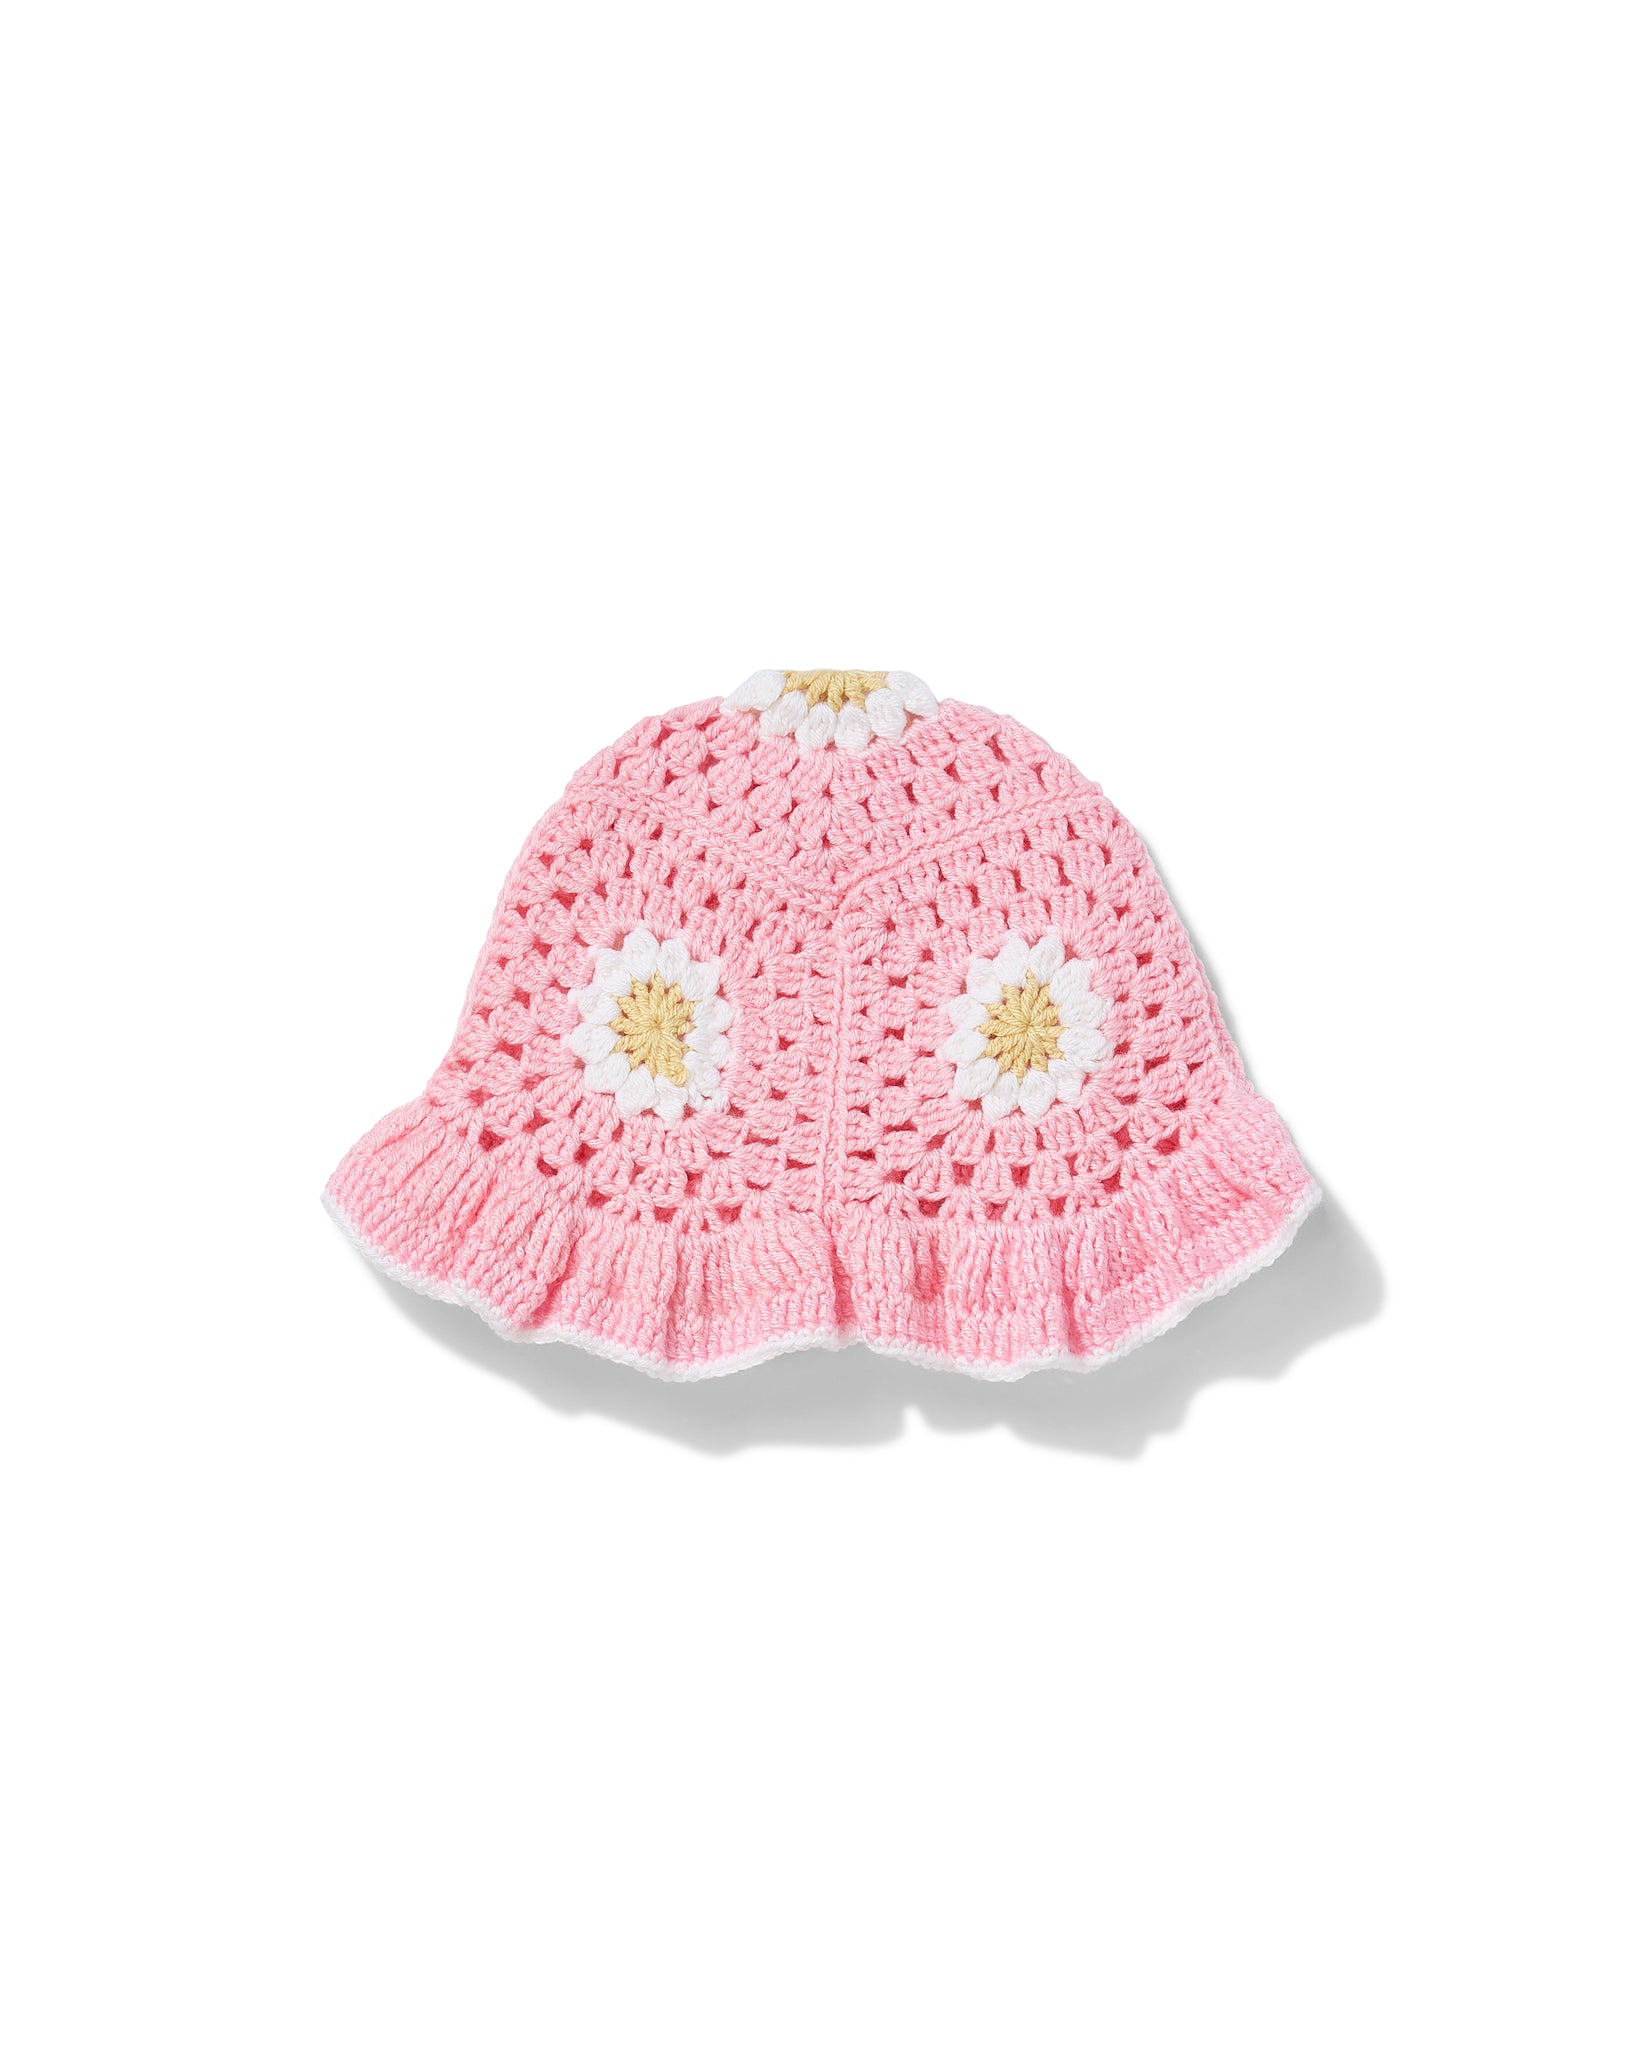 handmade crochet hat